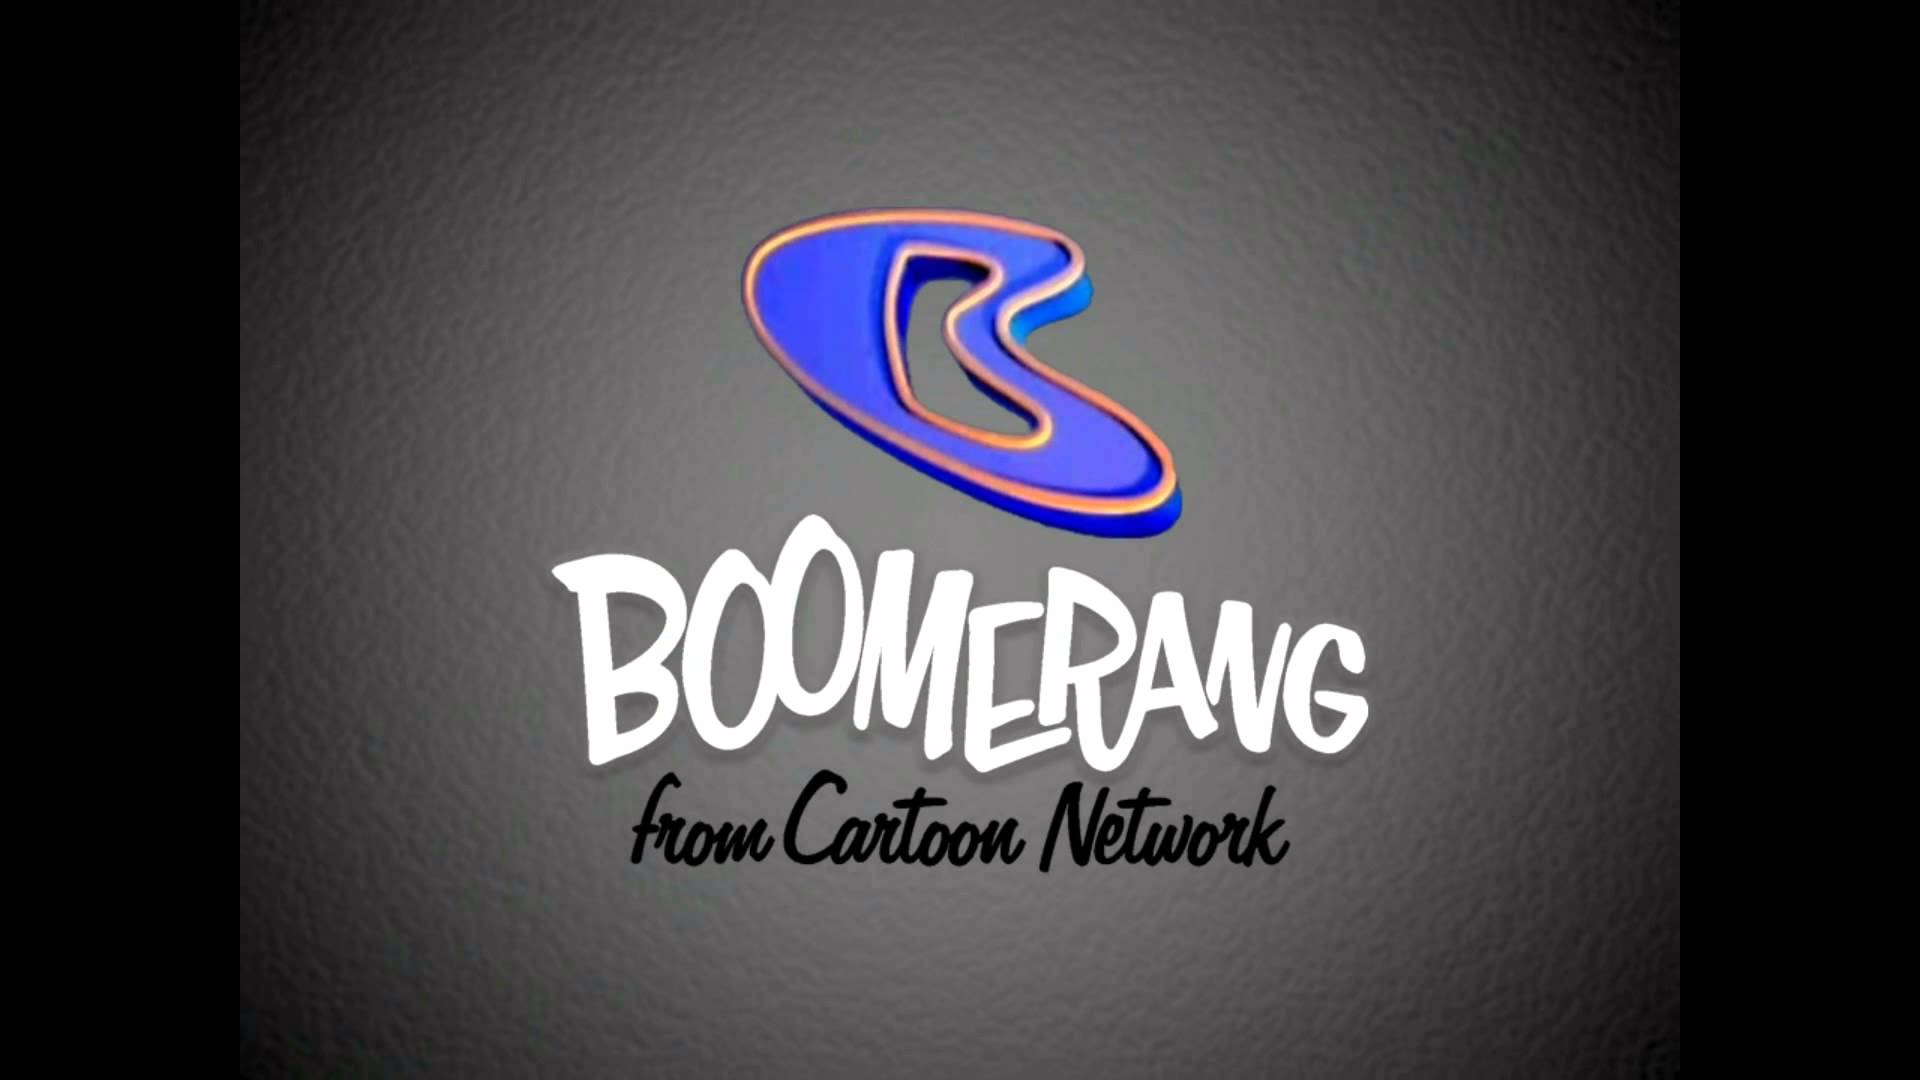 B Boomerang From Cartoon Network Logo - Boomerang from cartoon network Logos